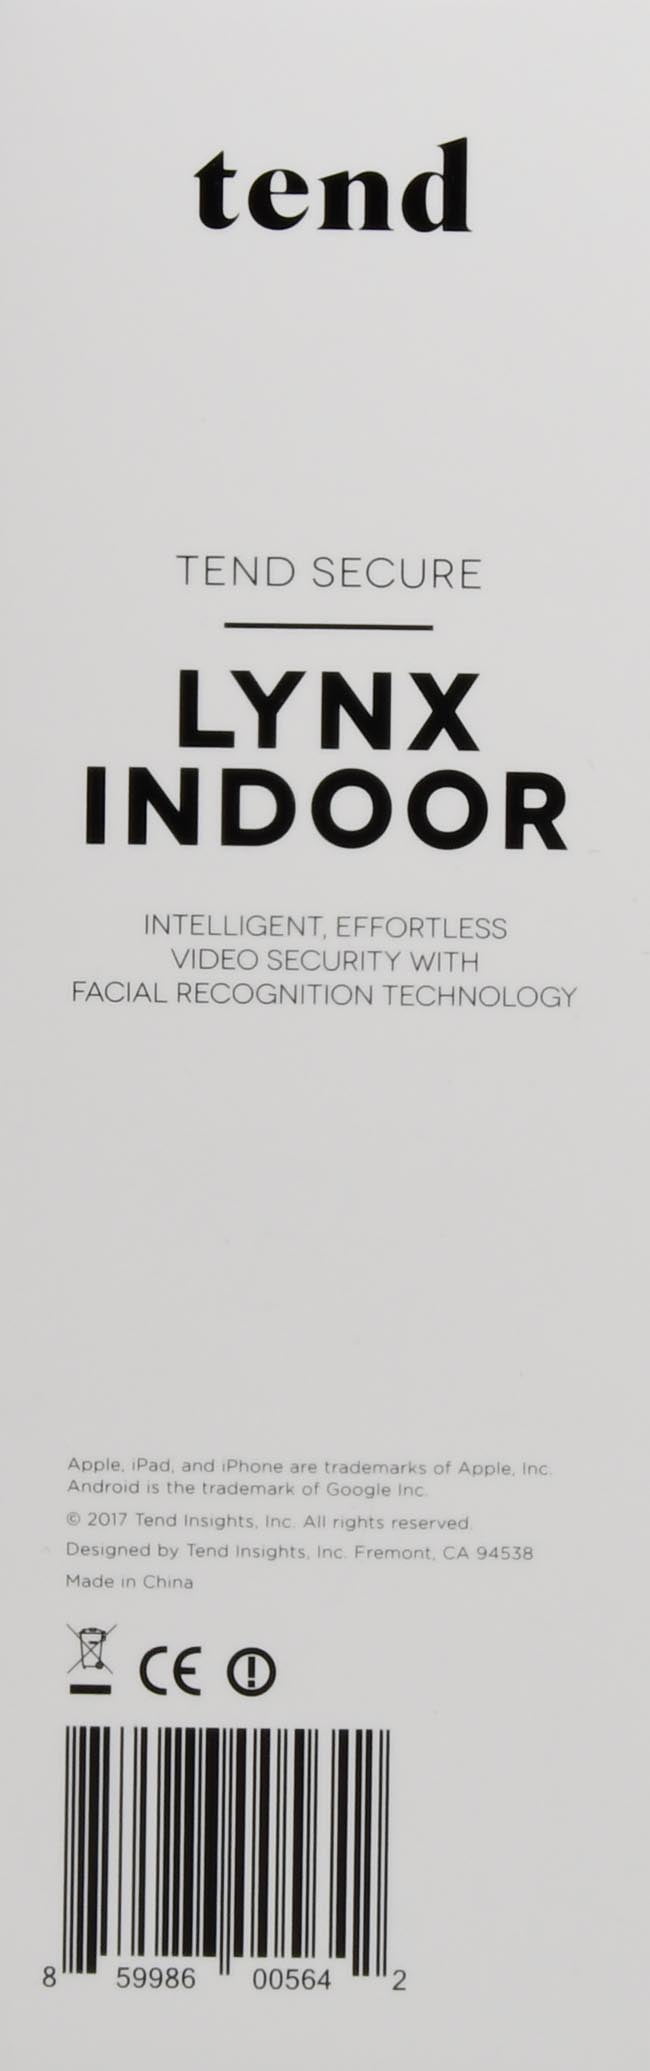 tend secure lynx indoor